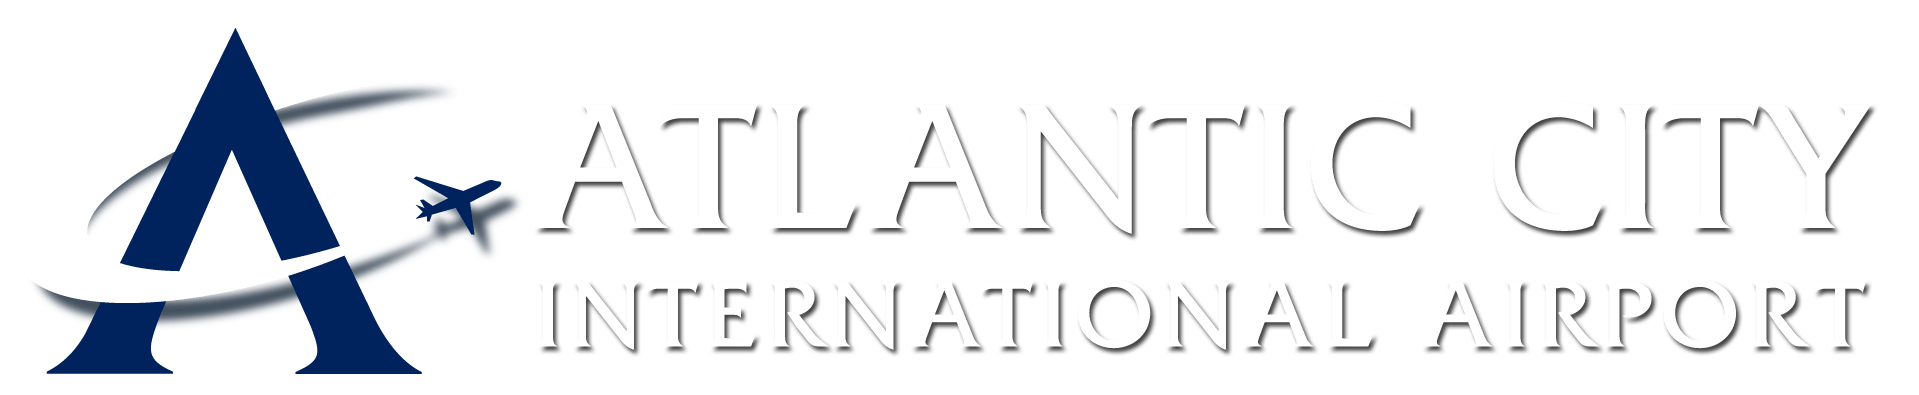 Atlantic City Logo - Atlantic City Airport